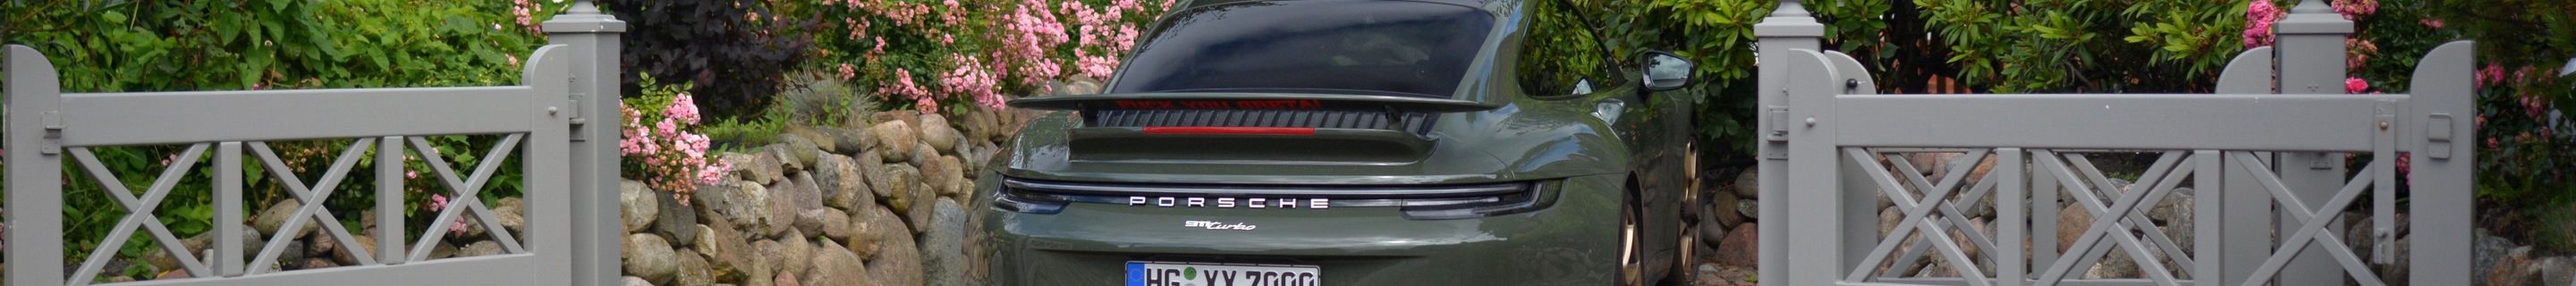 Porsche 992 Turbo